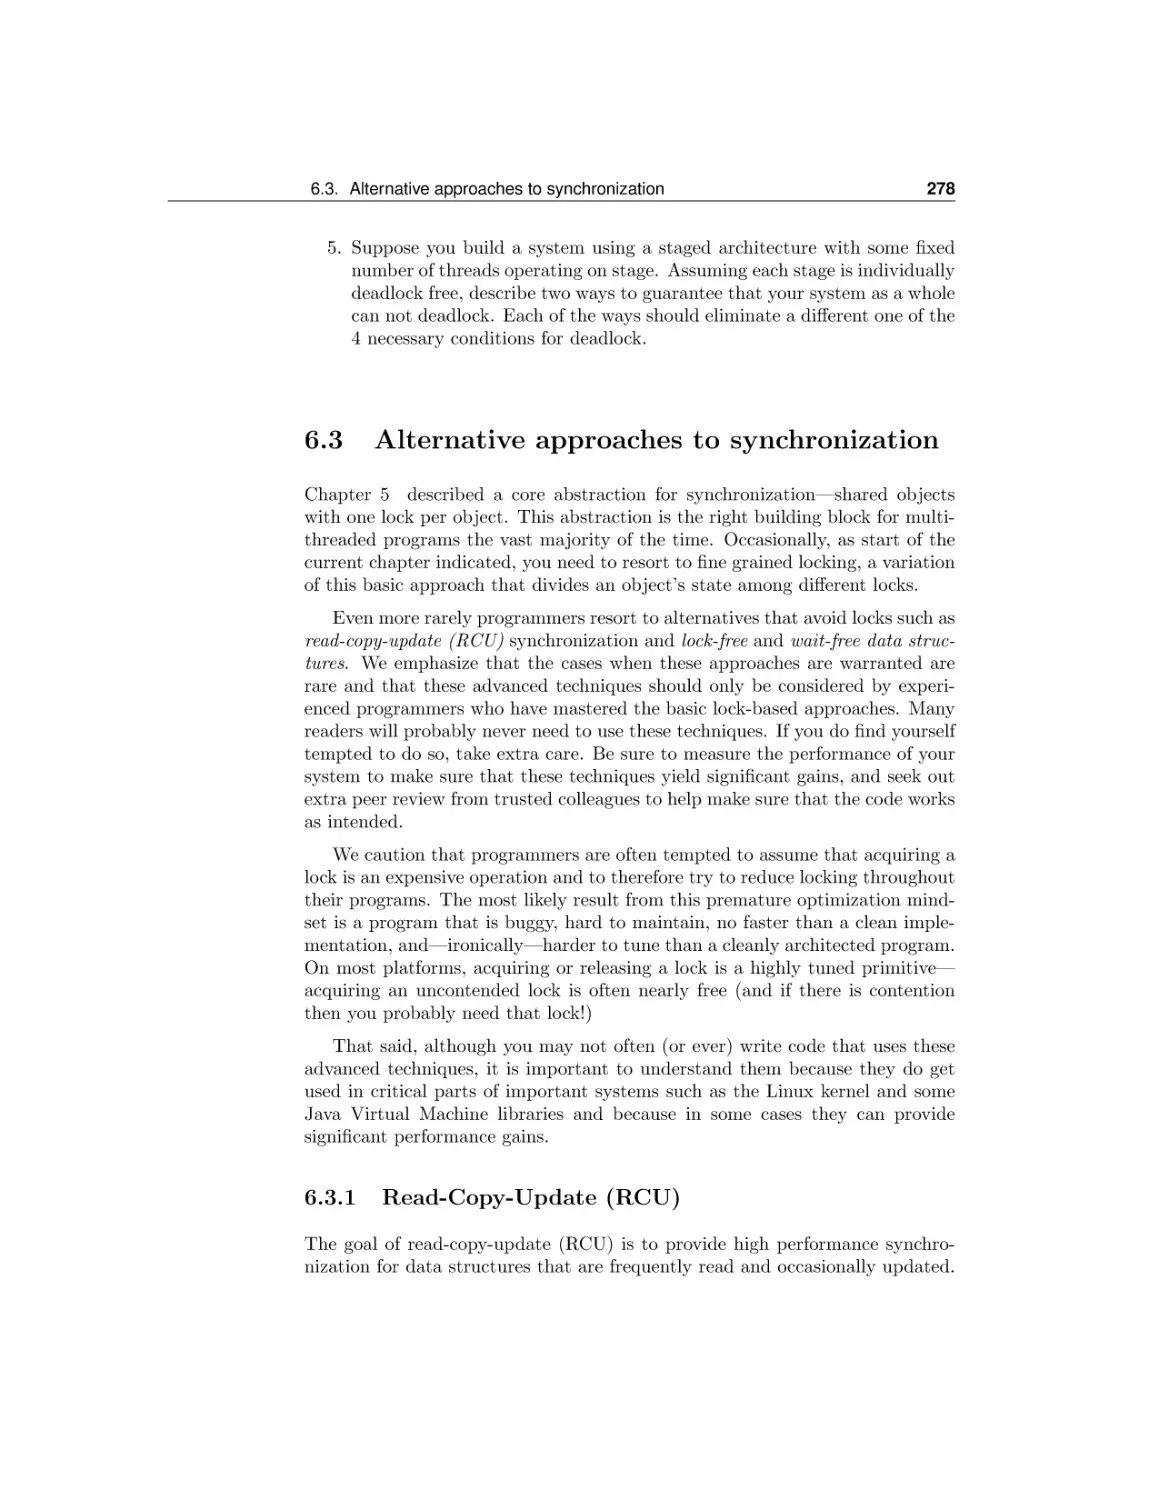 Alternative approaches to synchronization